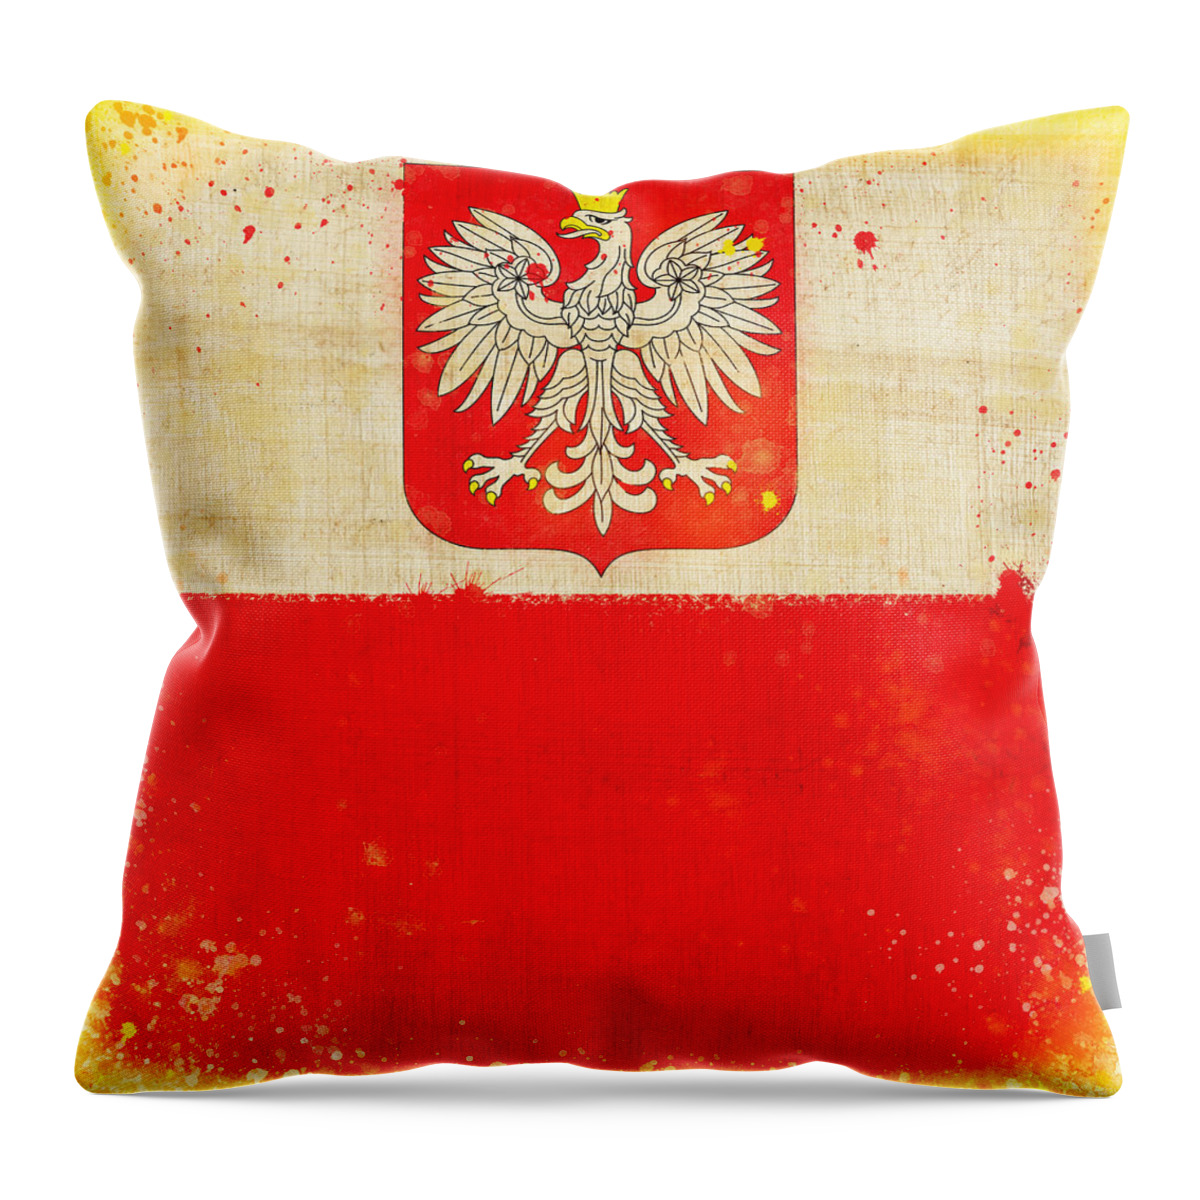 Duty Throw Pillow featuring the painting Poland flag by Setsiri Silapasuwanchai